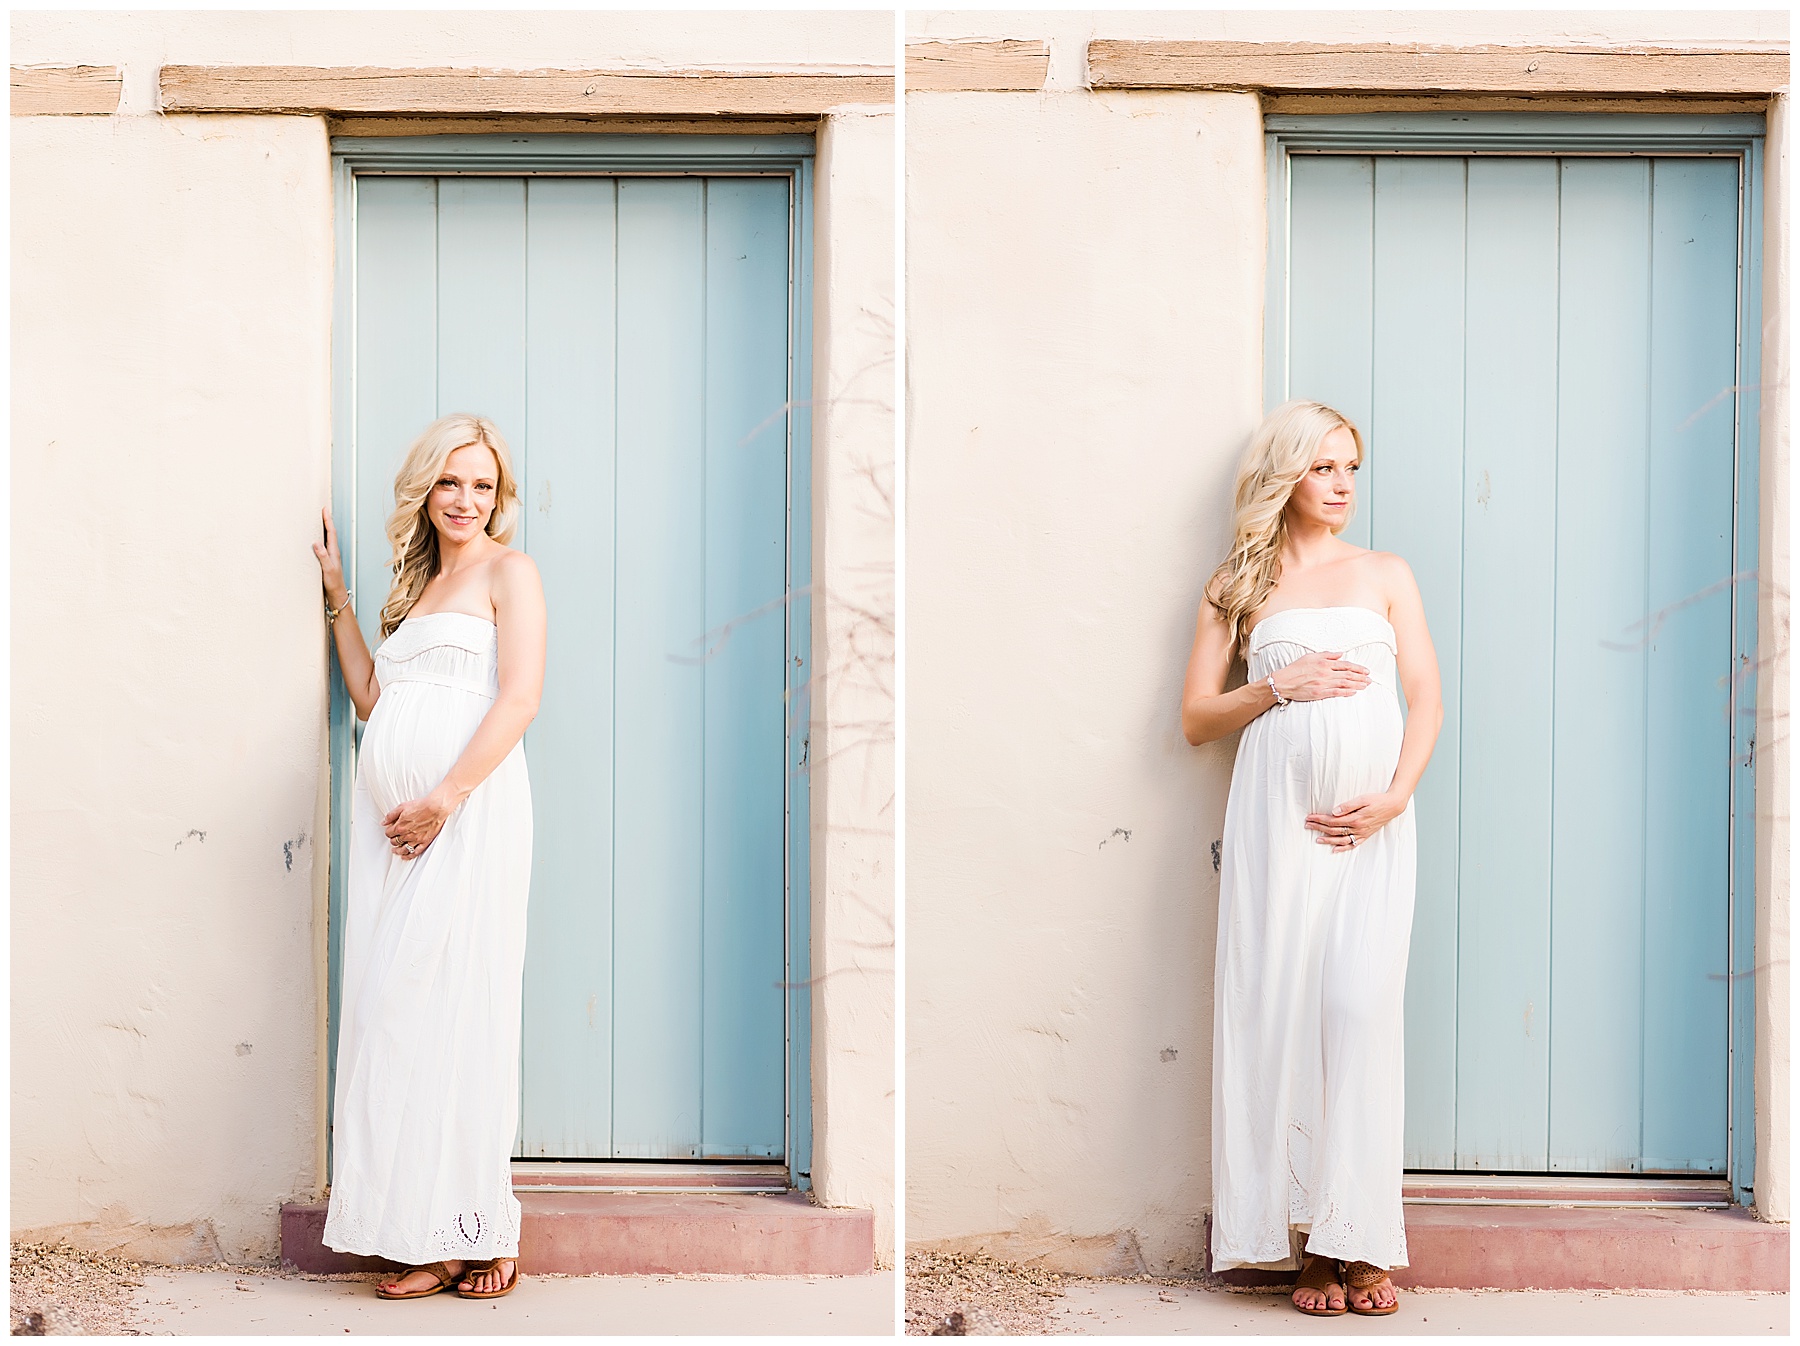 Dorota's-Maternity-Session-Phoenix-Arizona-Ashley-Flug-Photography39.jpg